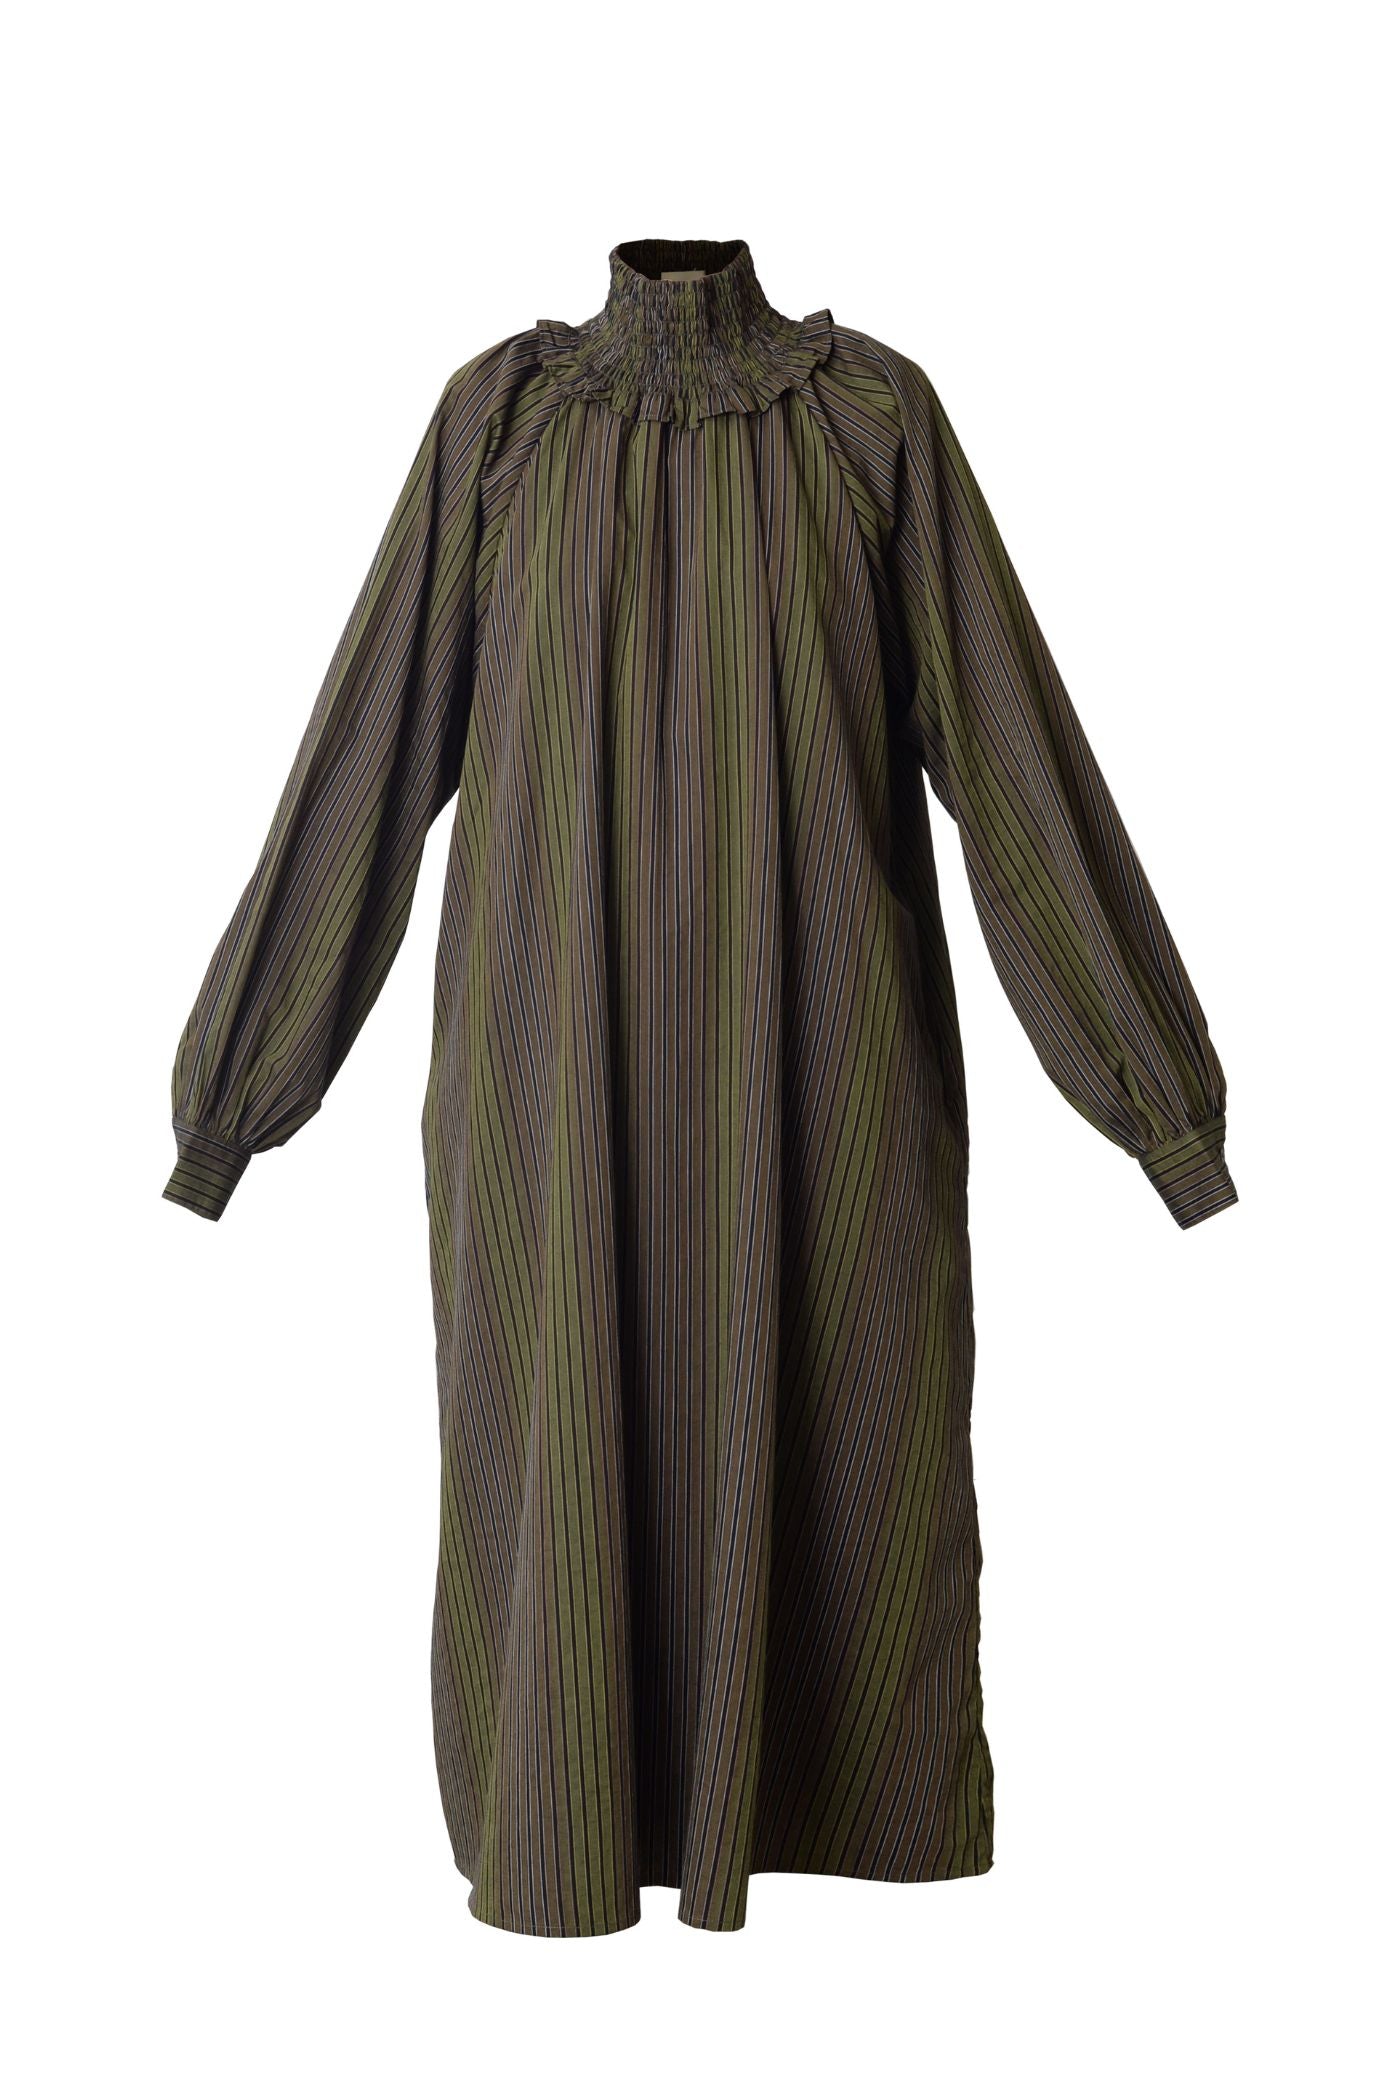 Billie Khaki Striped Mock Neck Dress